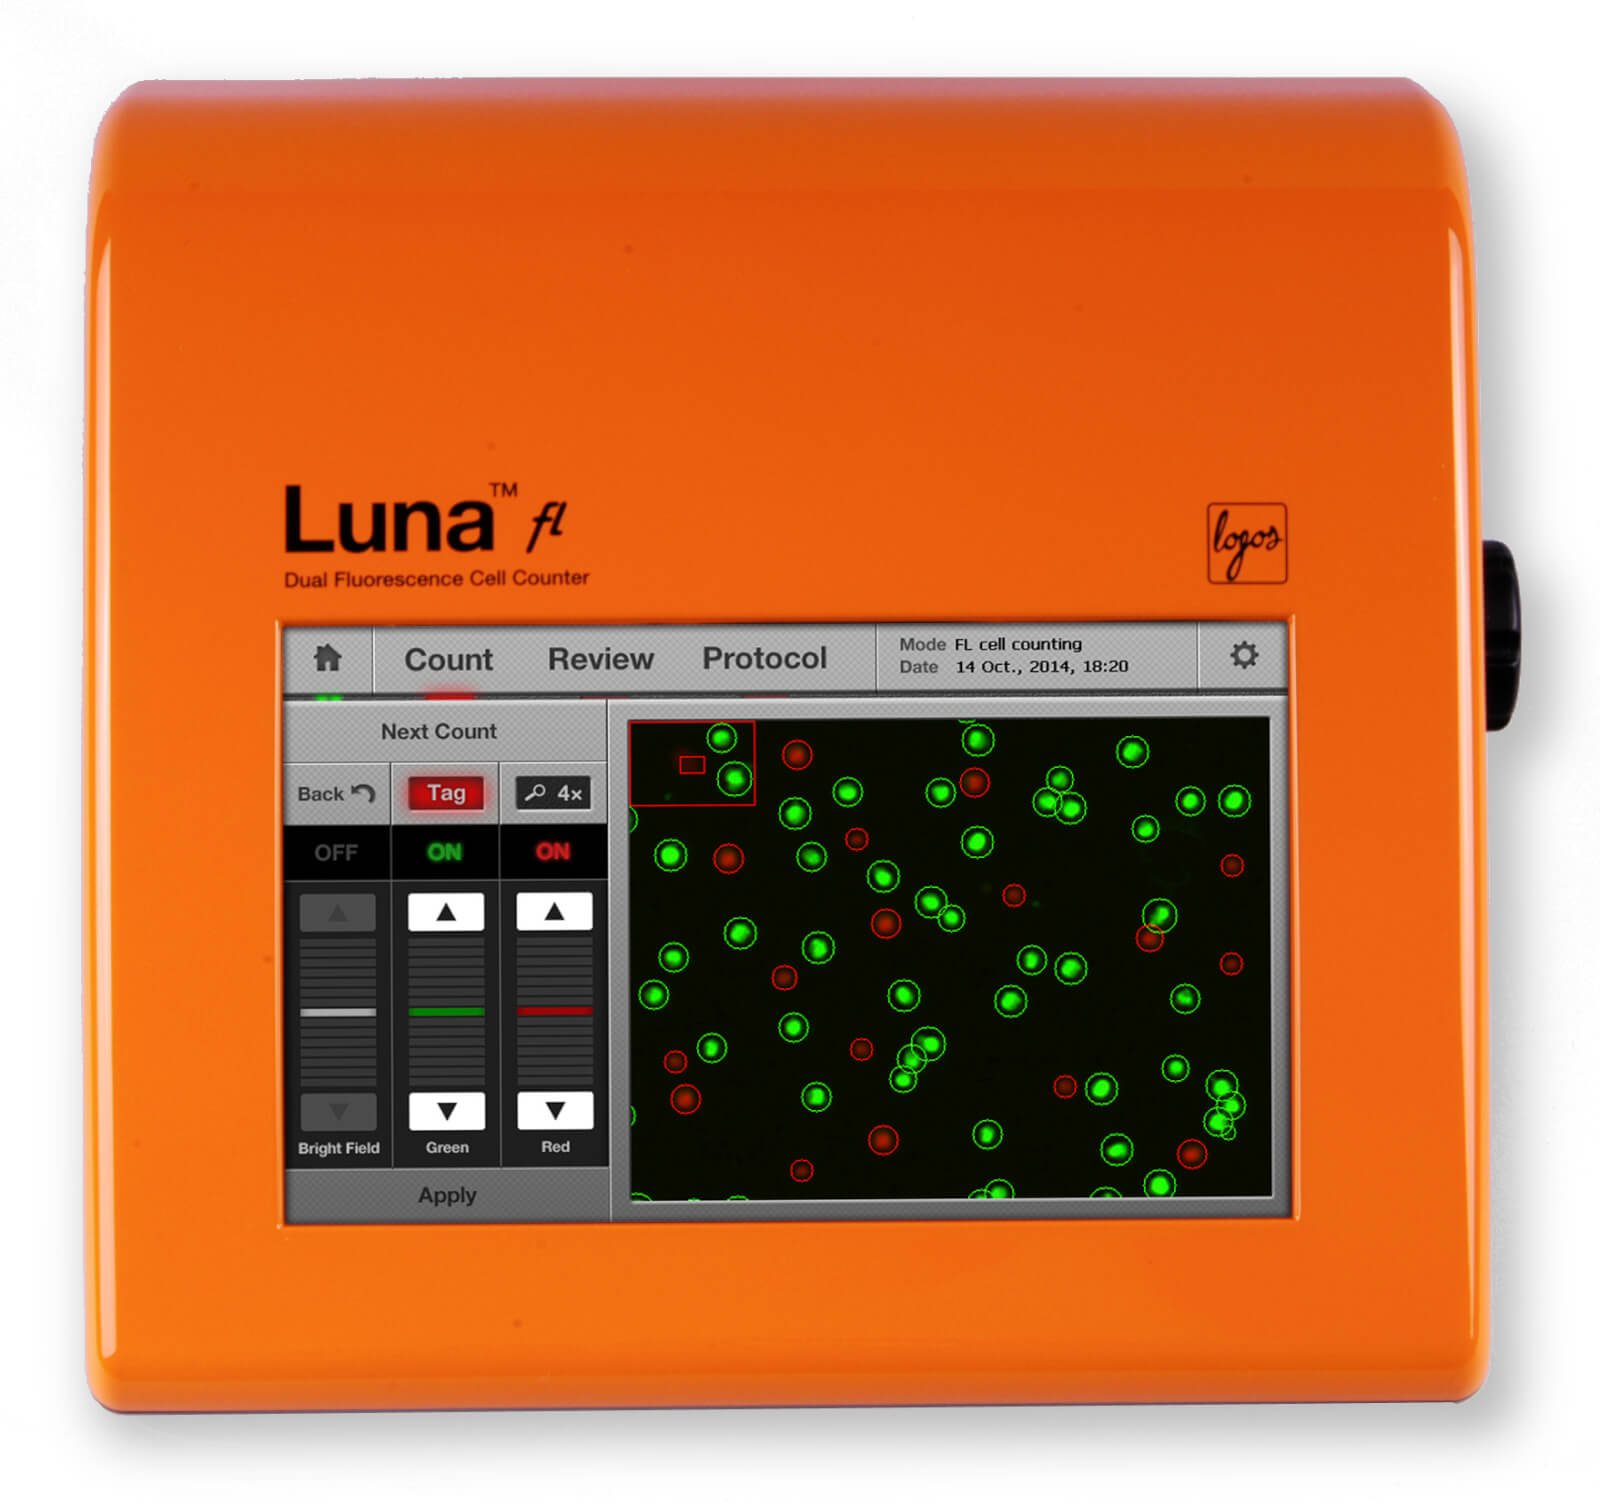 Luna FL, Dual Fluorescence Cell Counter